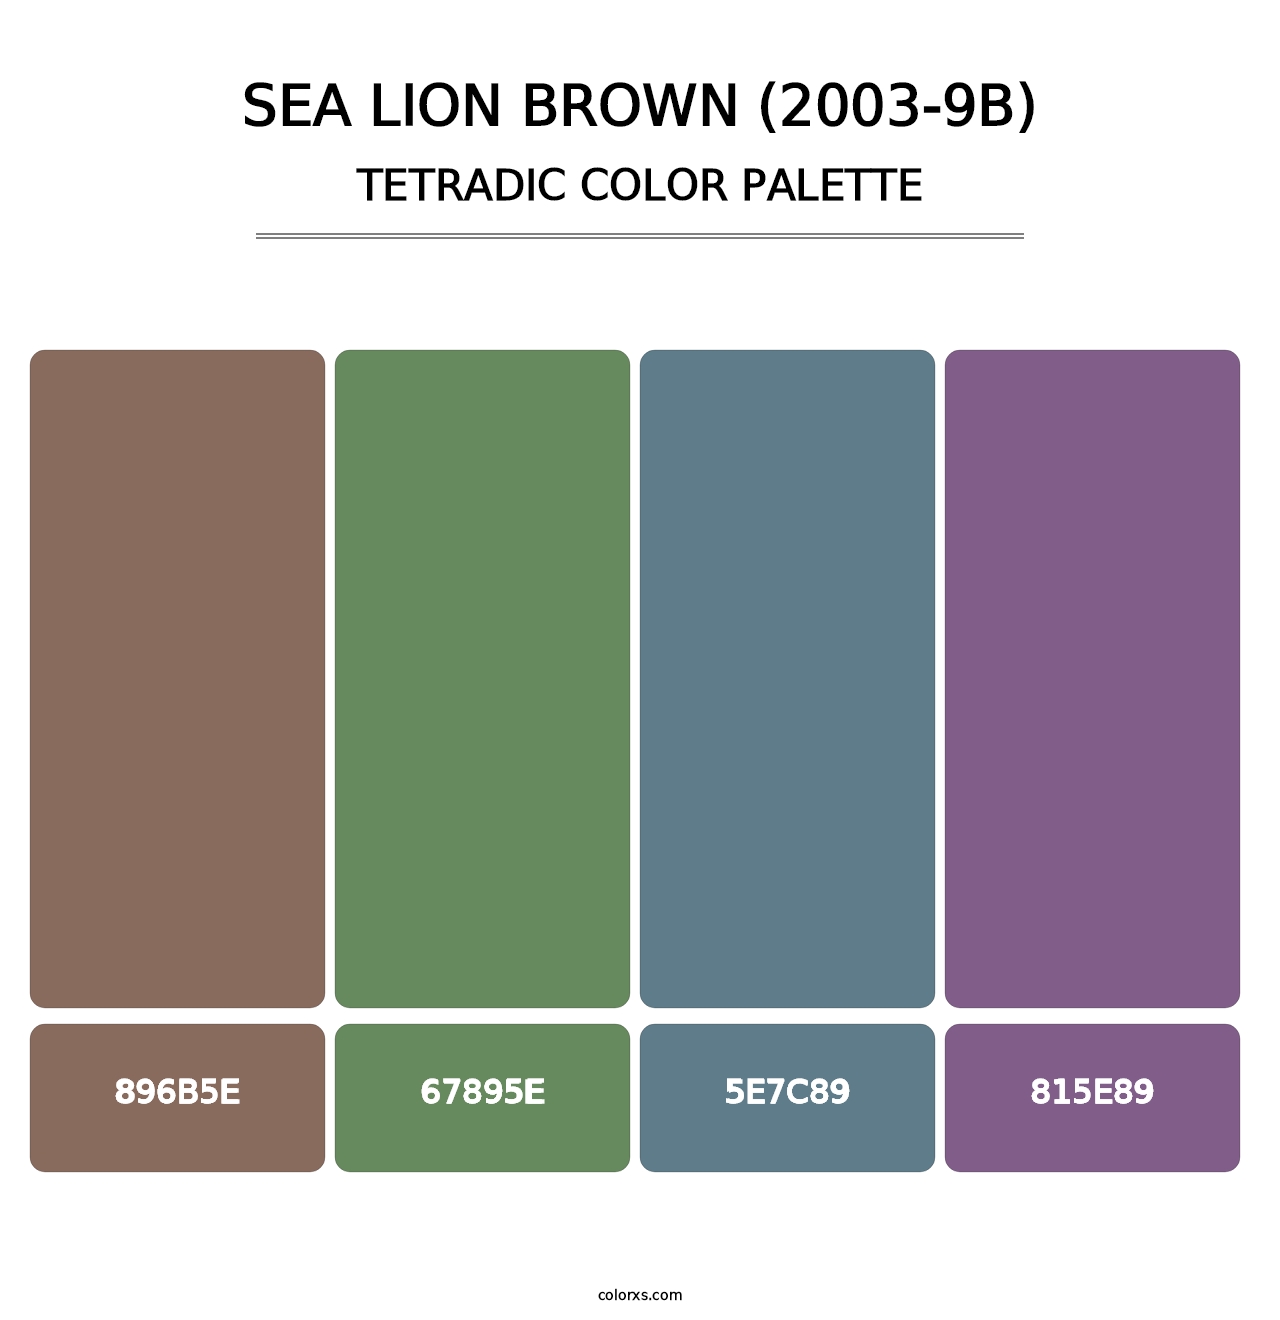 Sea Lion Brown (2003-9B) - Tetradic Color Palette